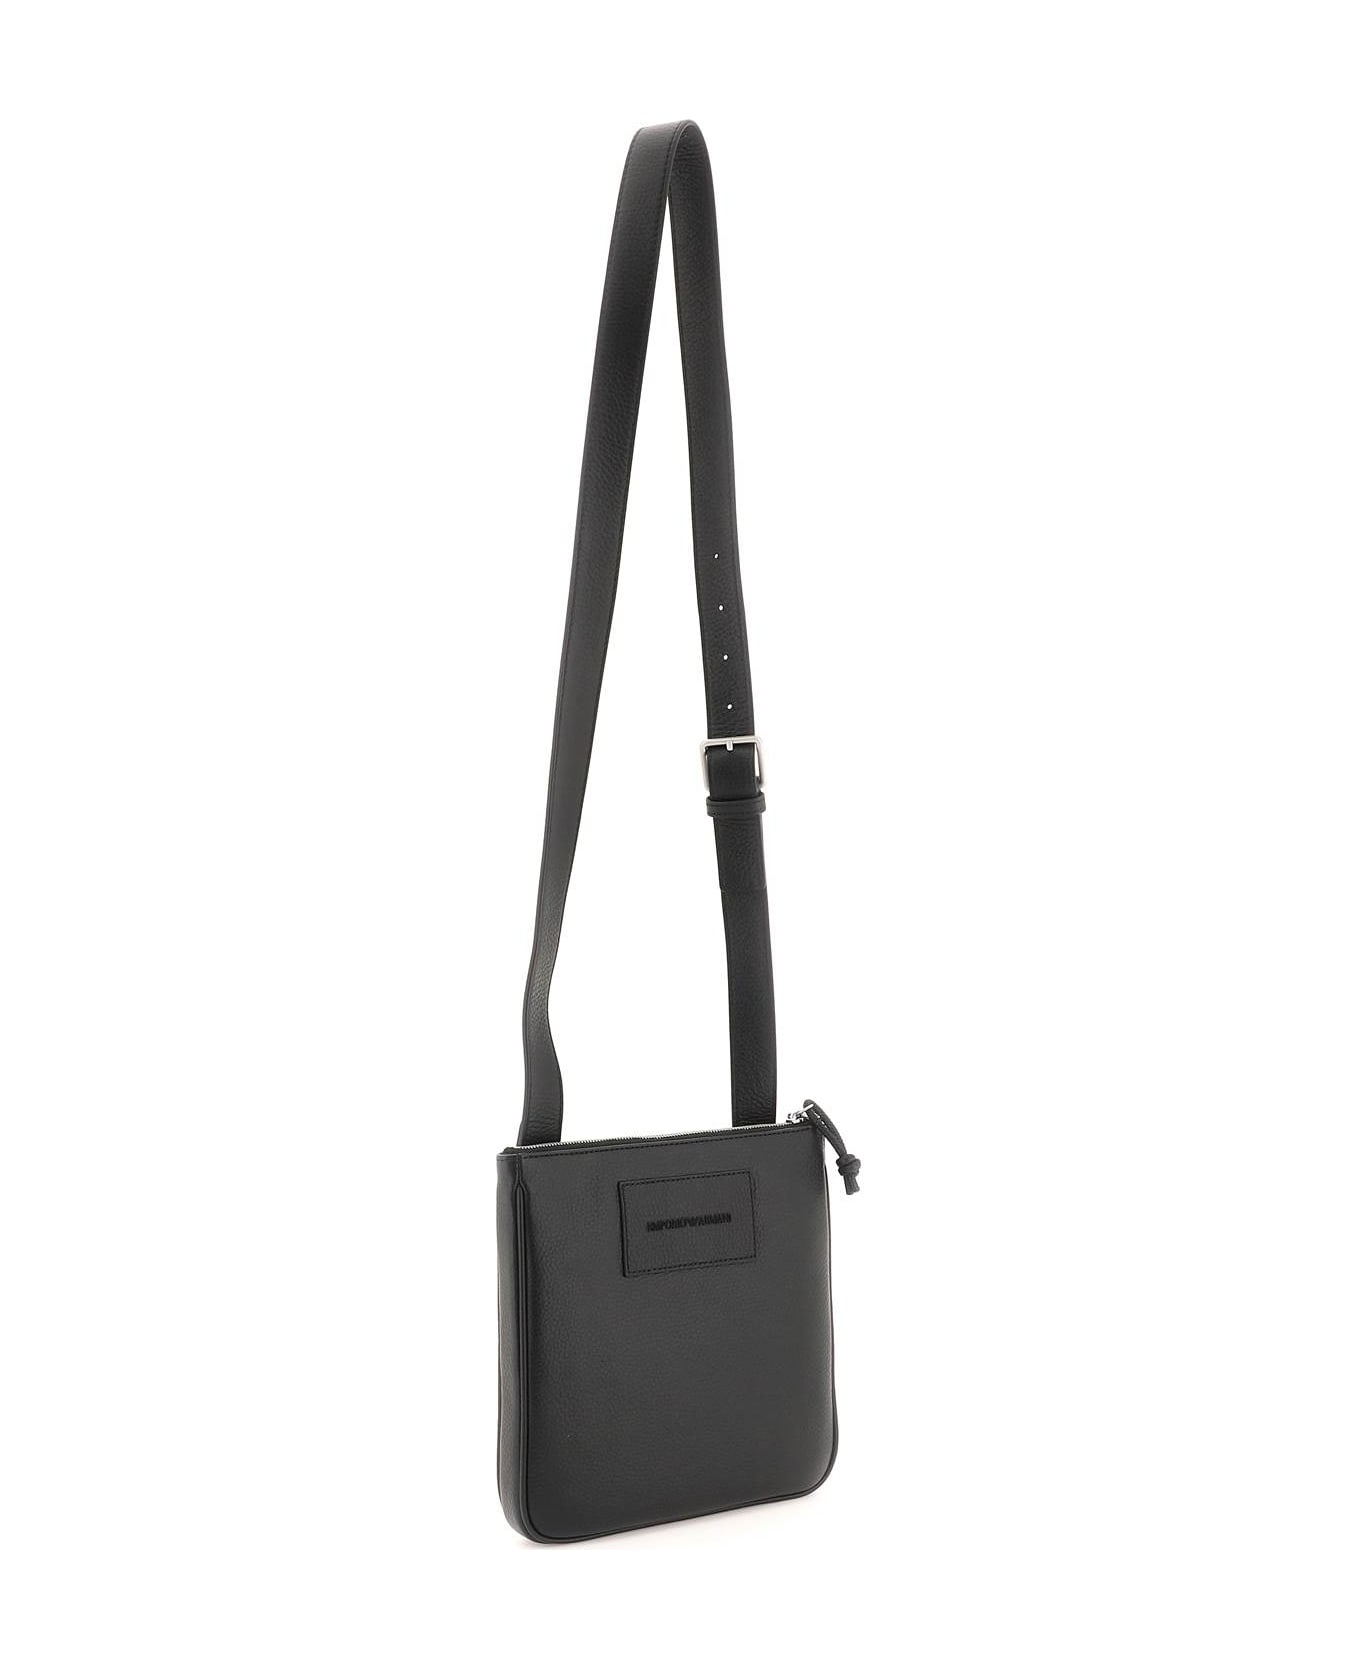 Emporio Armani Leather Crossbody Bag - NERO (Black) ショルダーバッグ